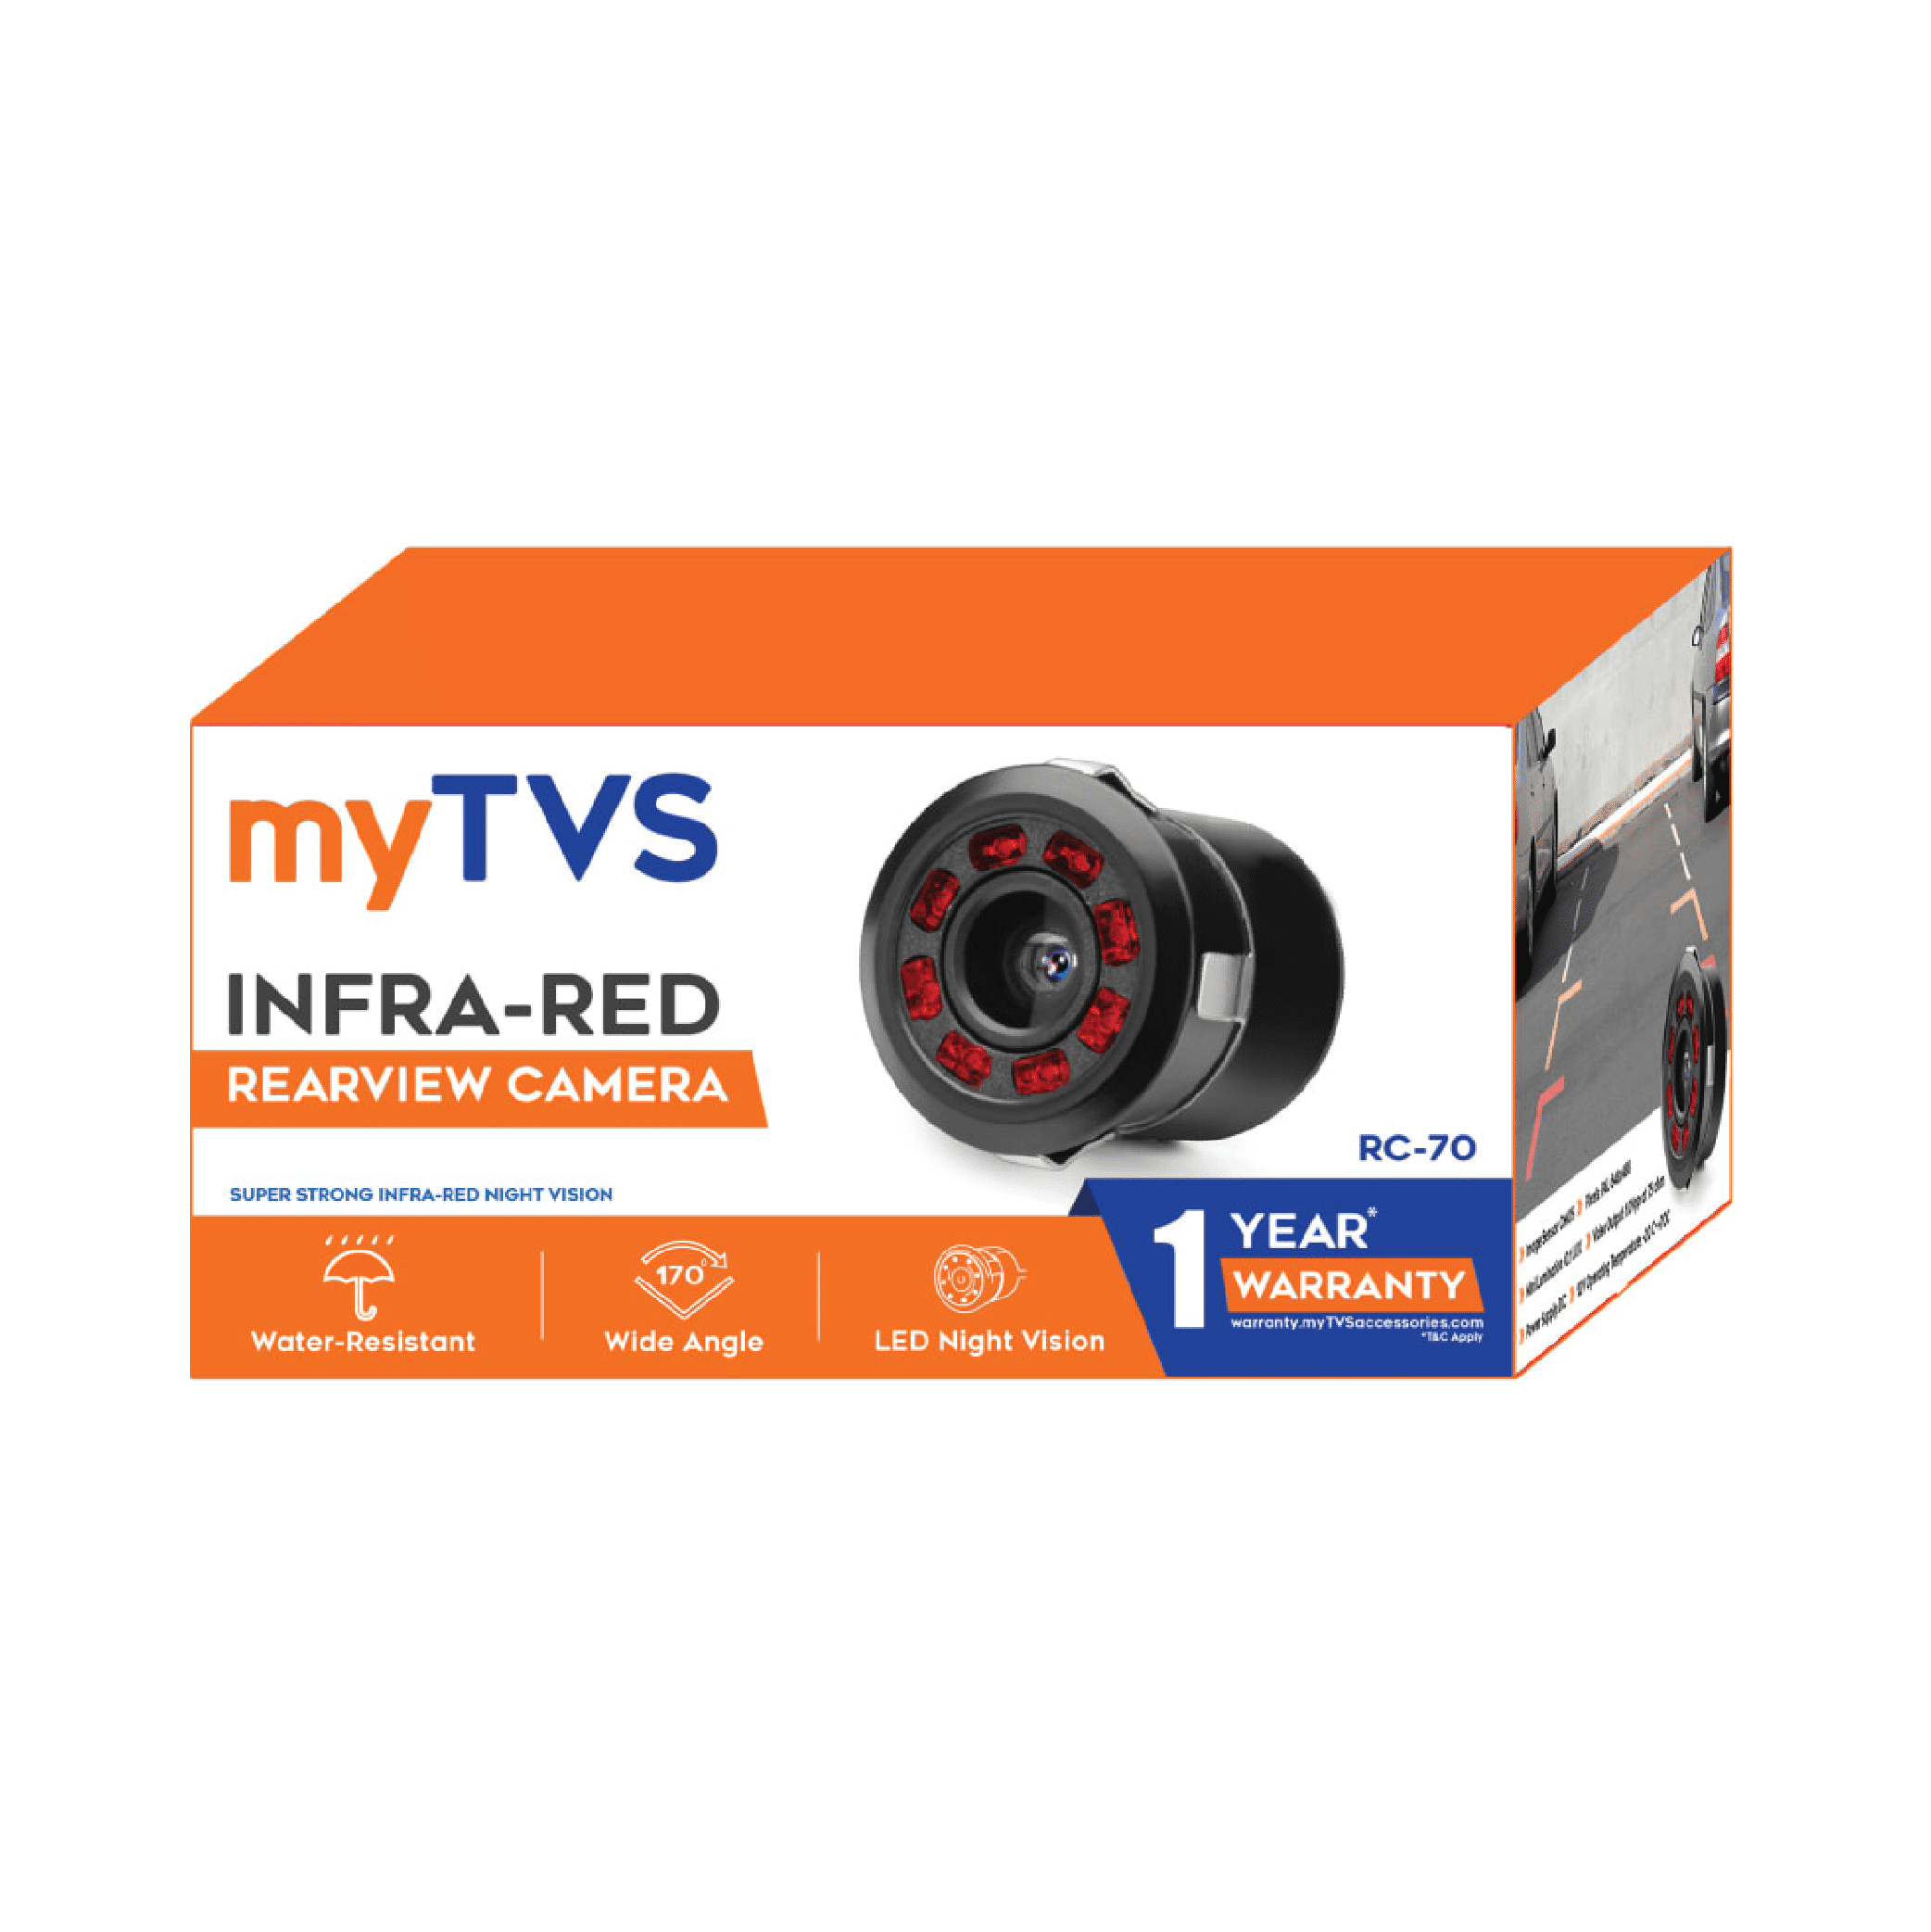 myTVS TRC-70 Infra-red Night Vision Camera